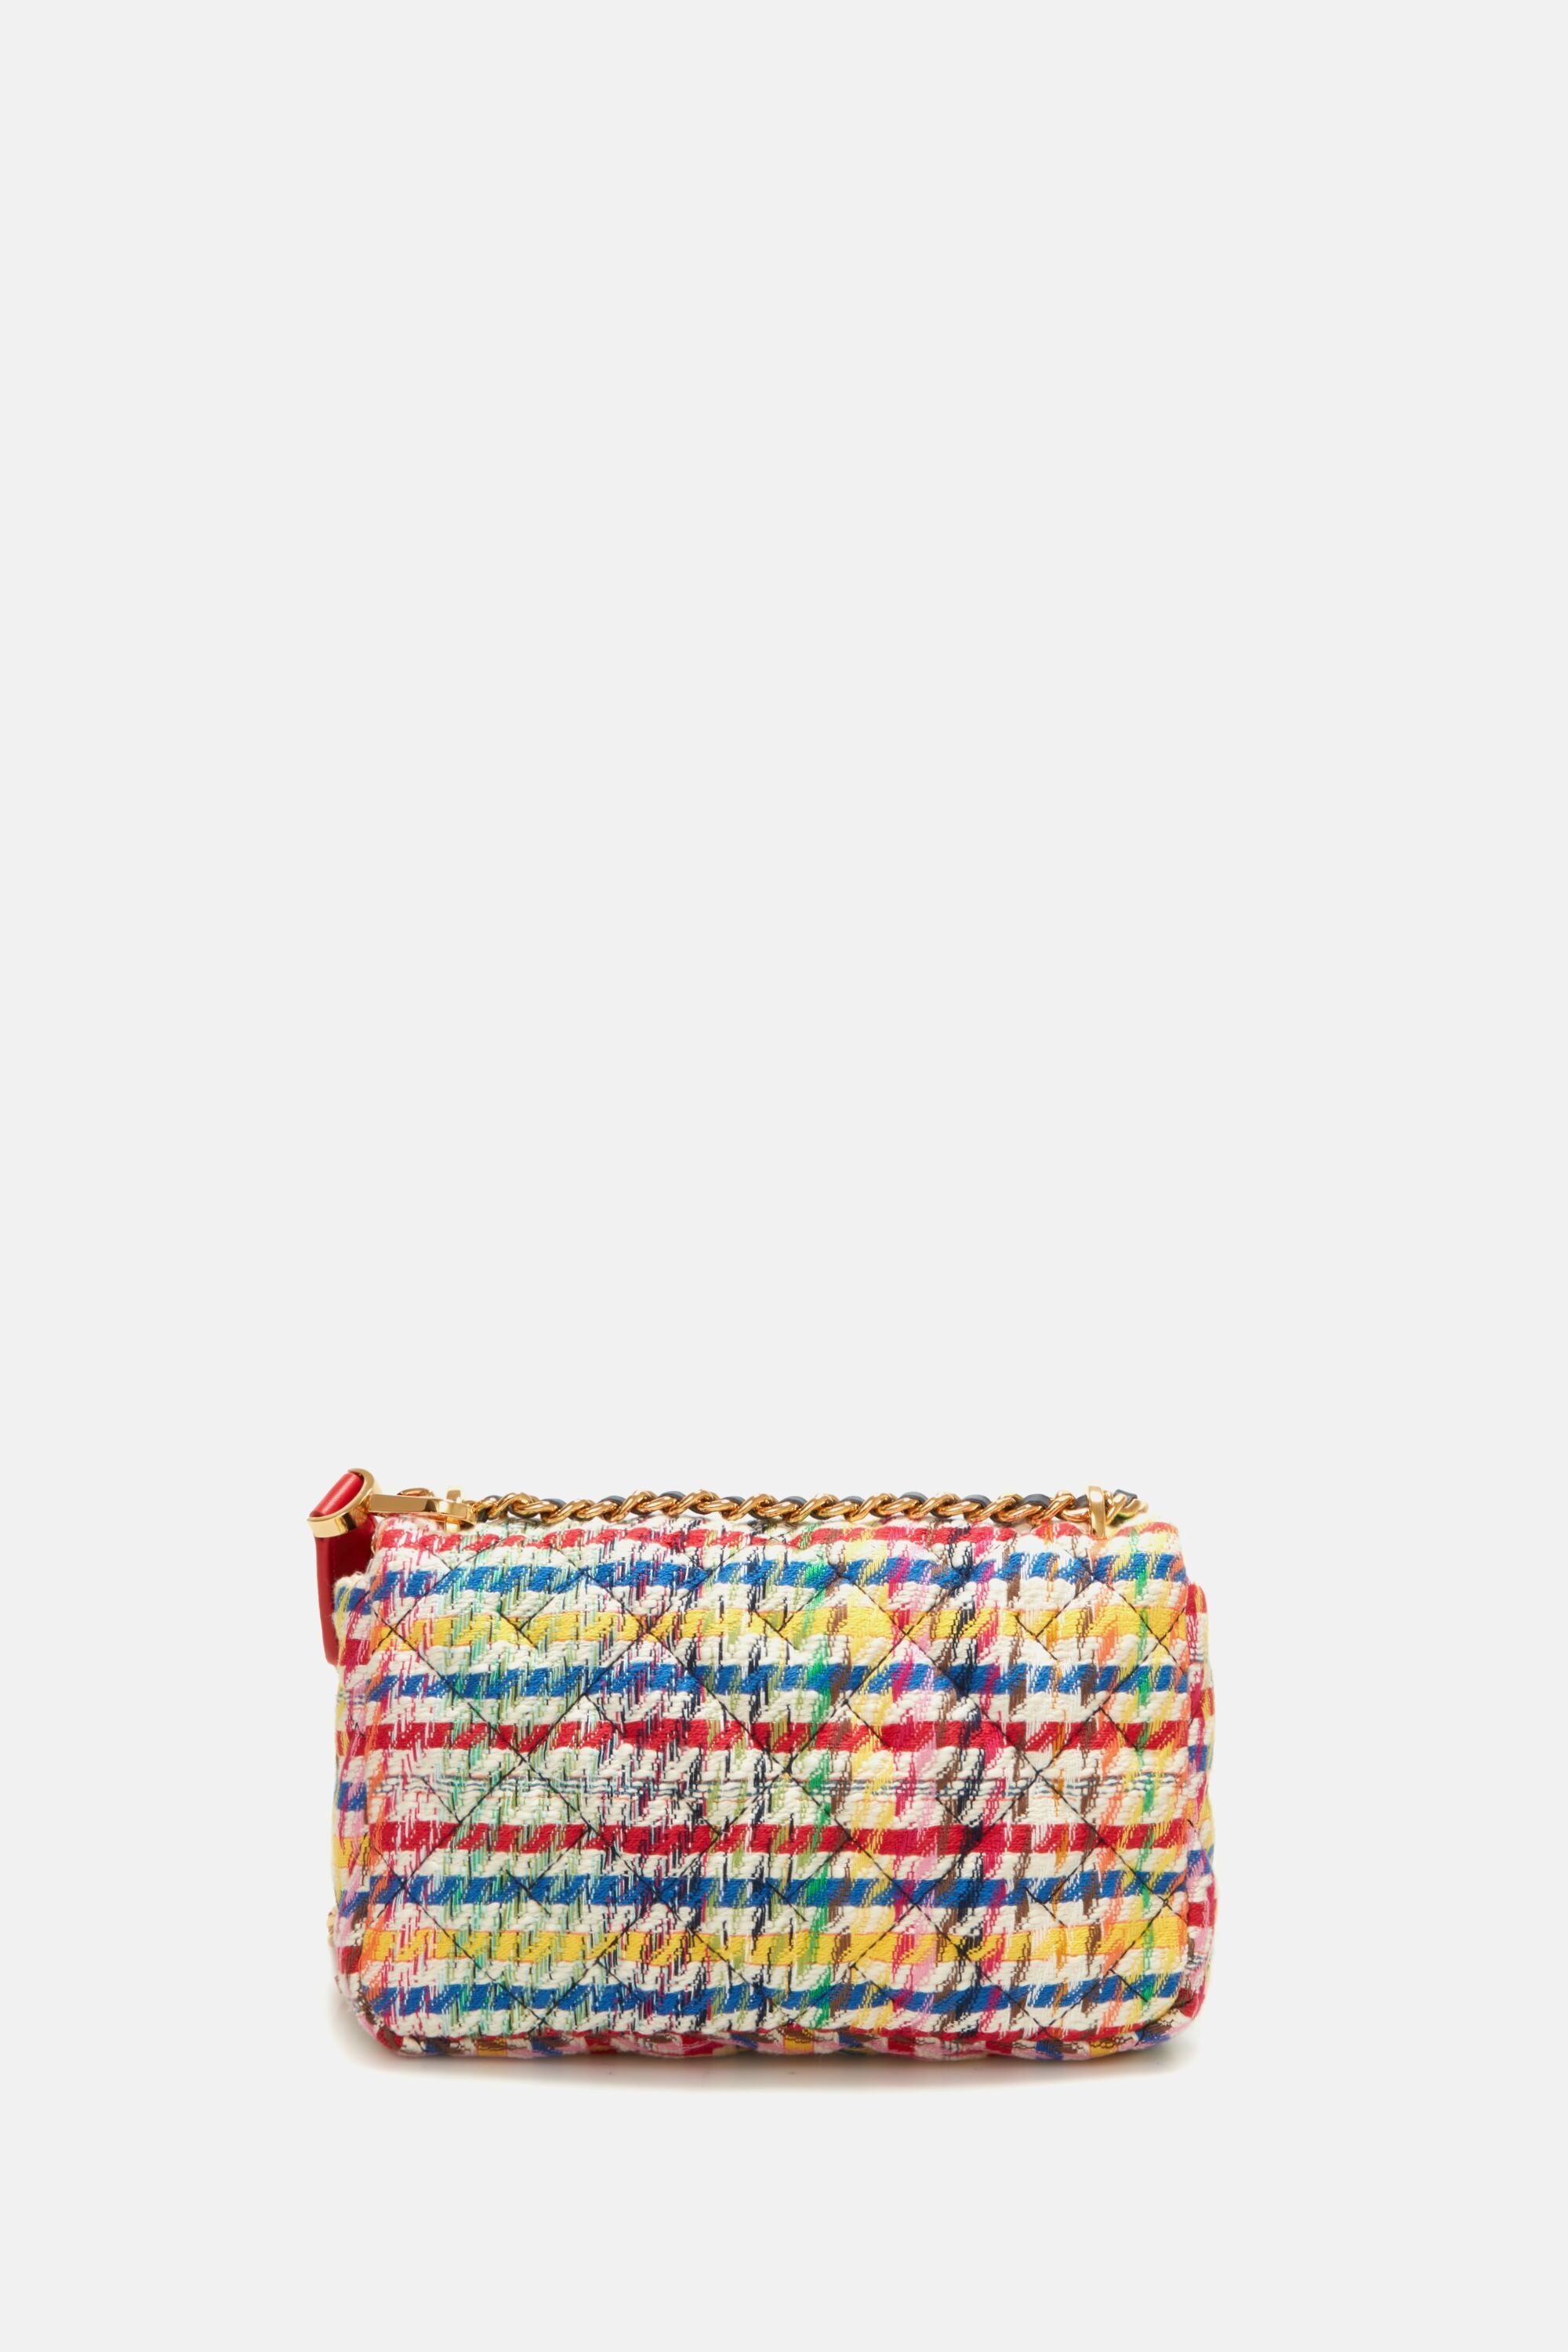 Bimba  Small shoulder bag multicolour - CH Carolina Herrera